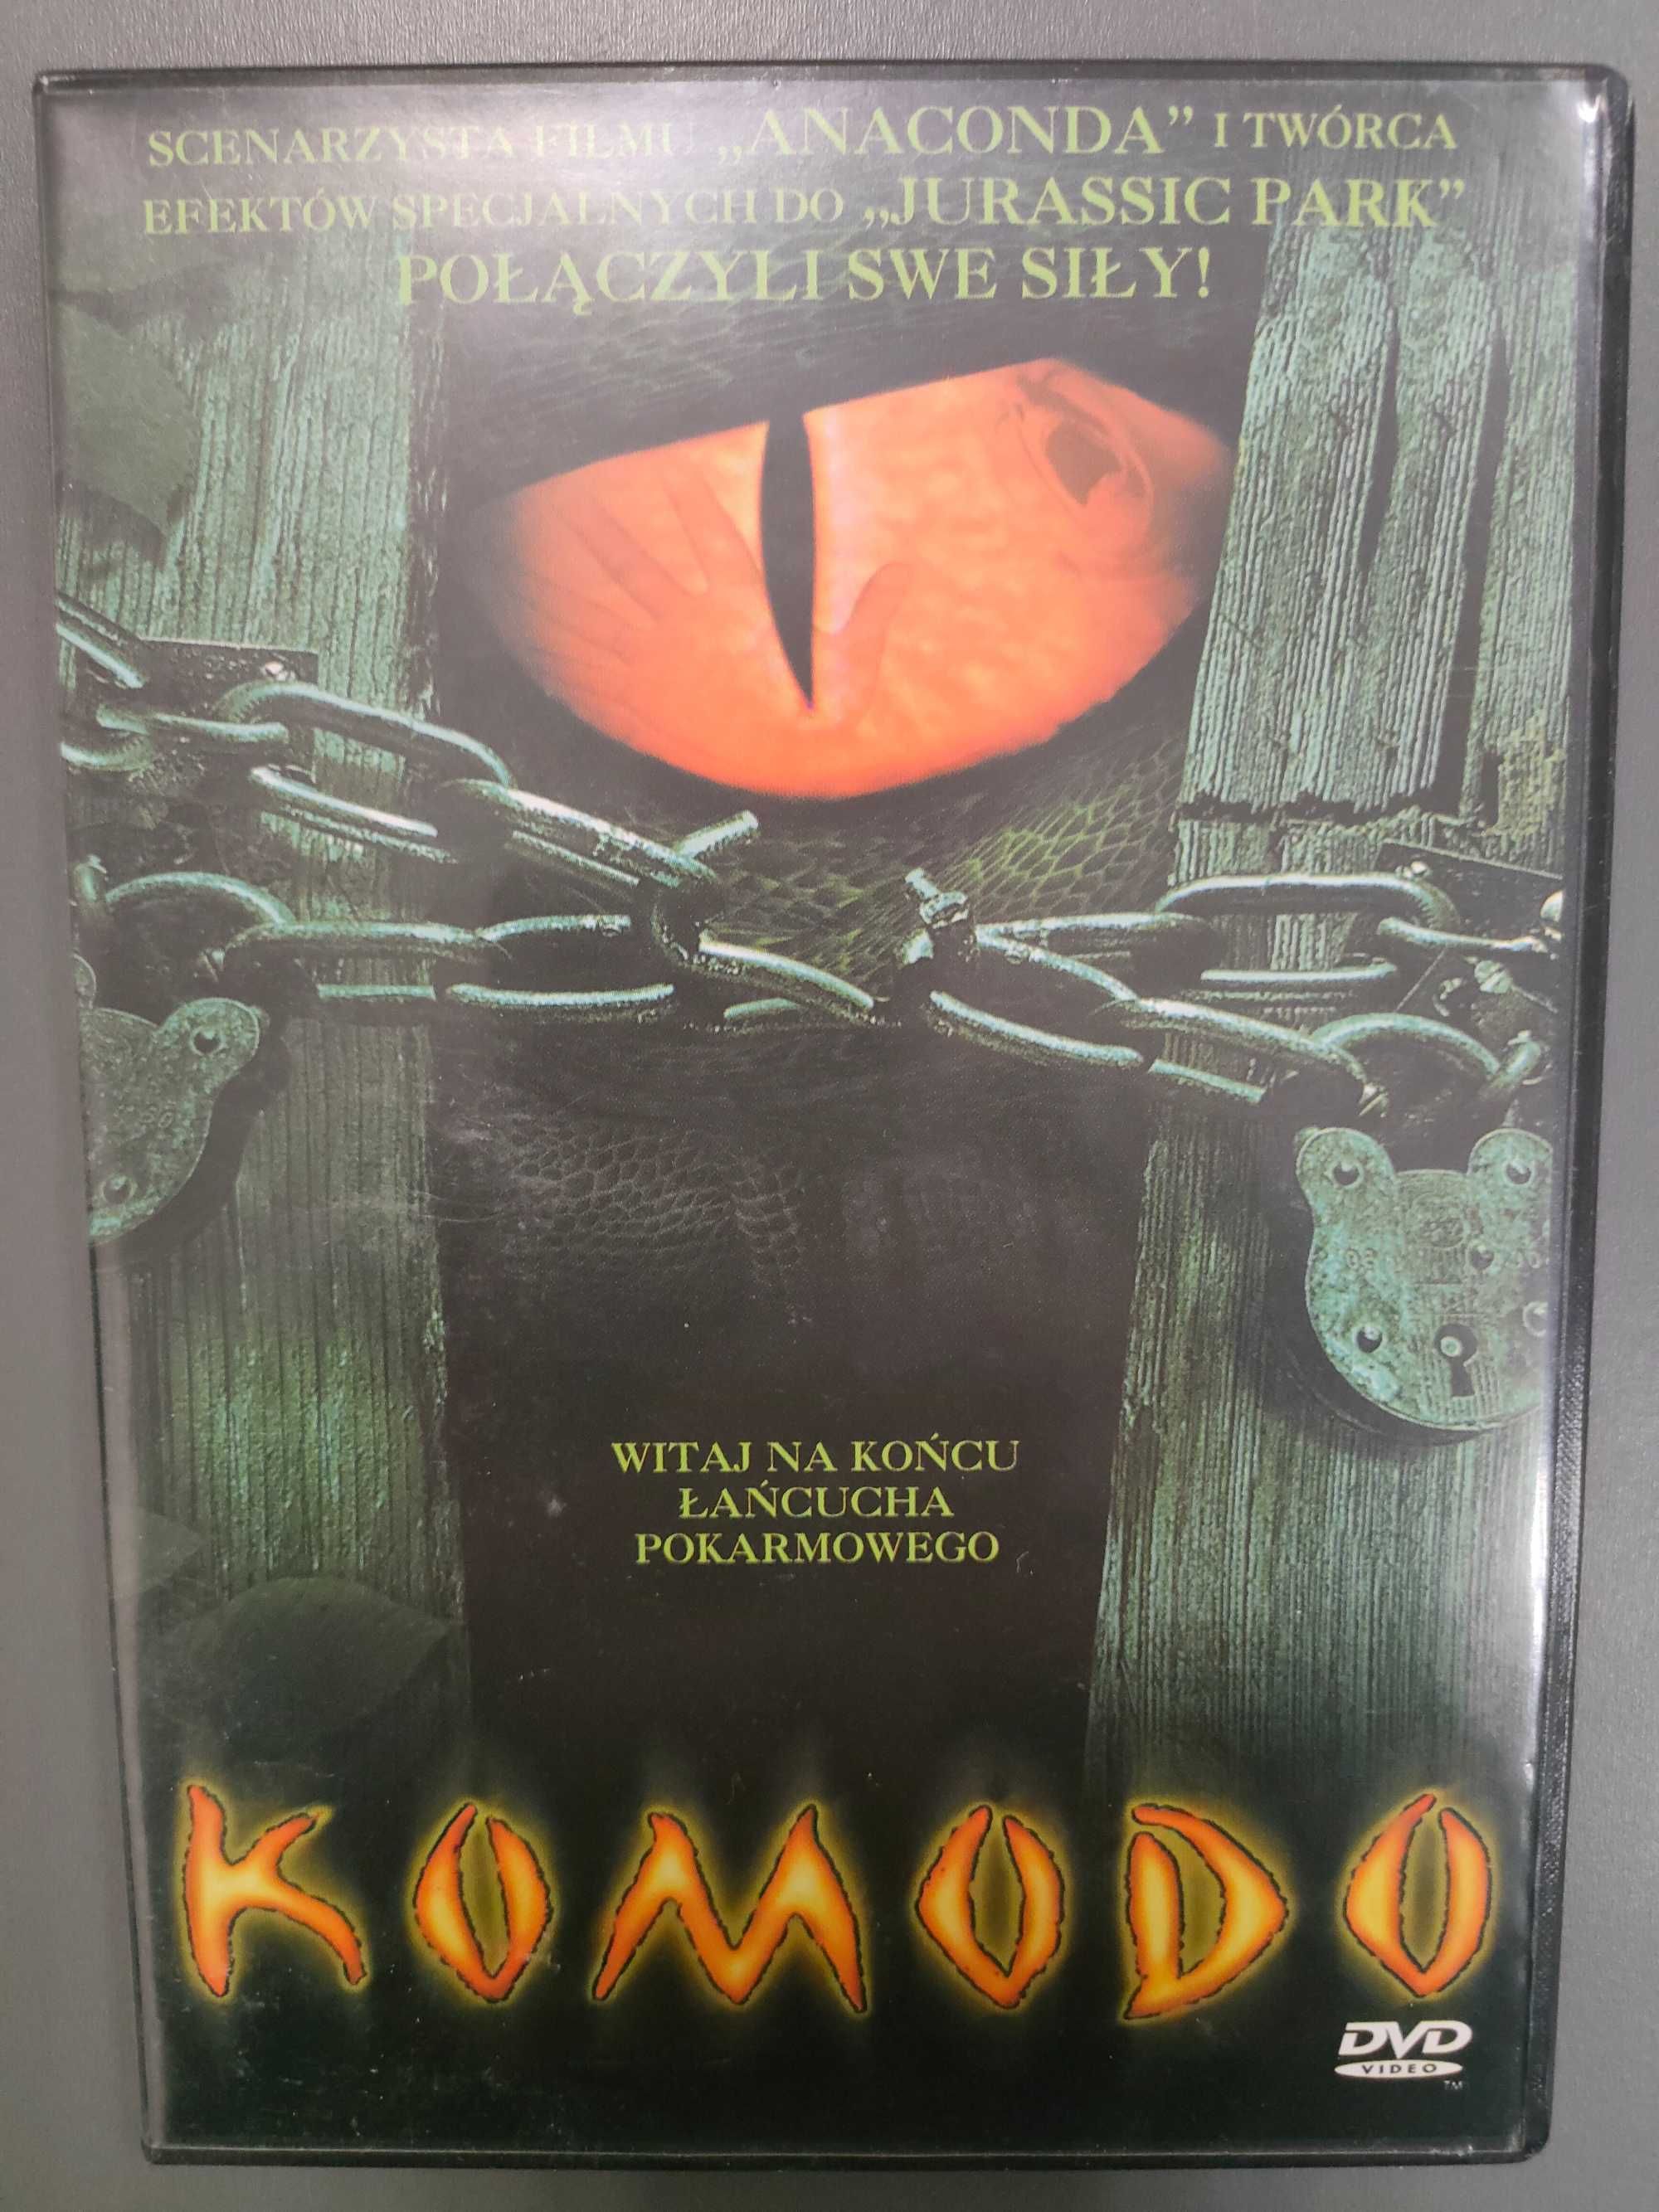 Film Komodo DVD.